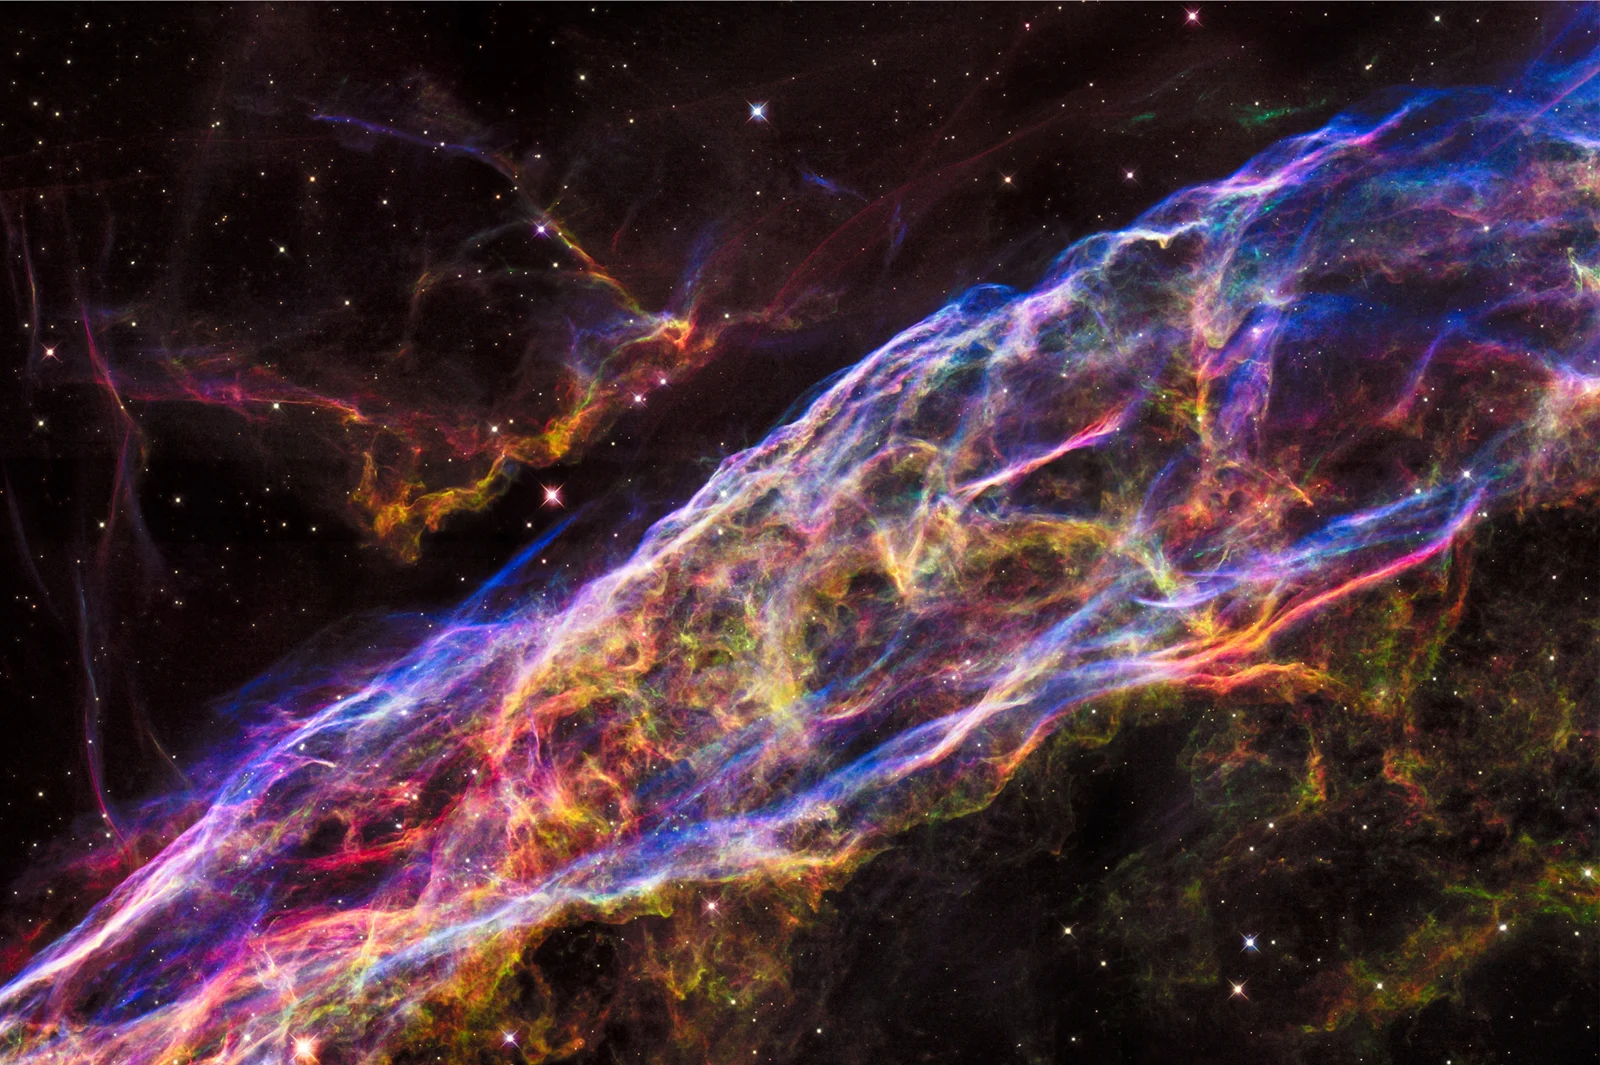 Hubble Veil Nebula Supernova Remnant